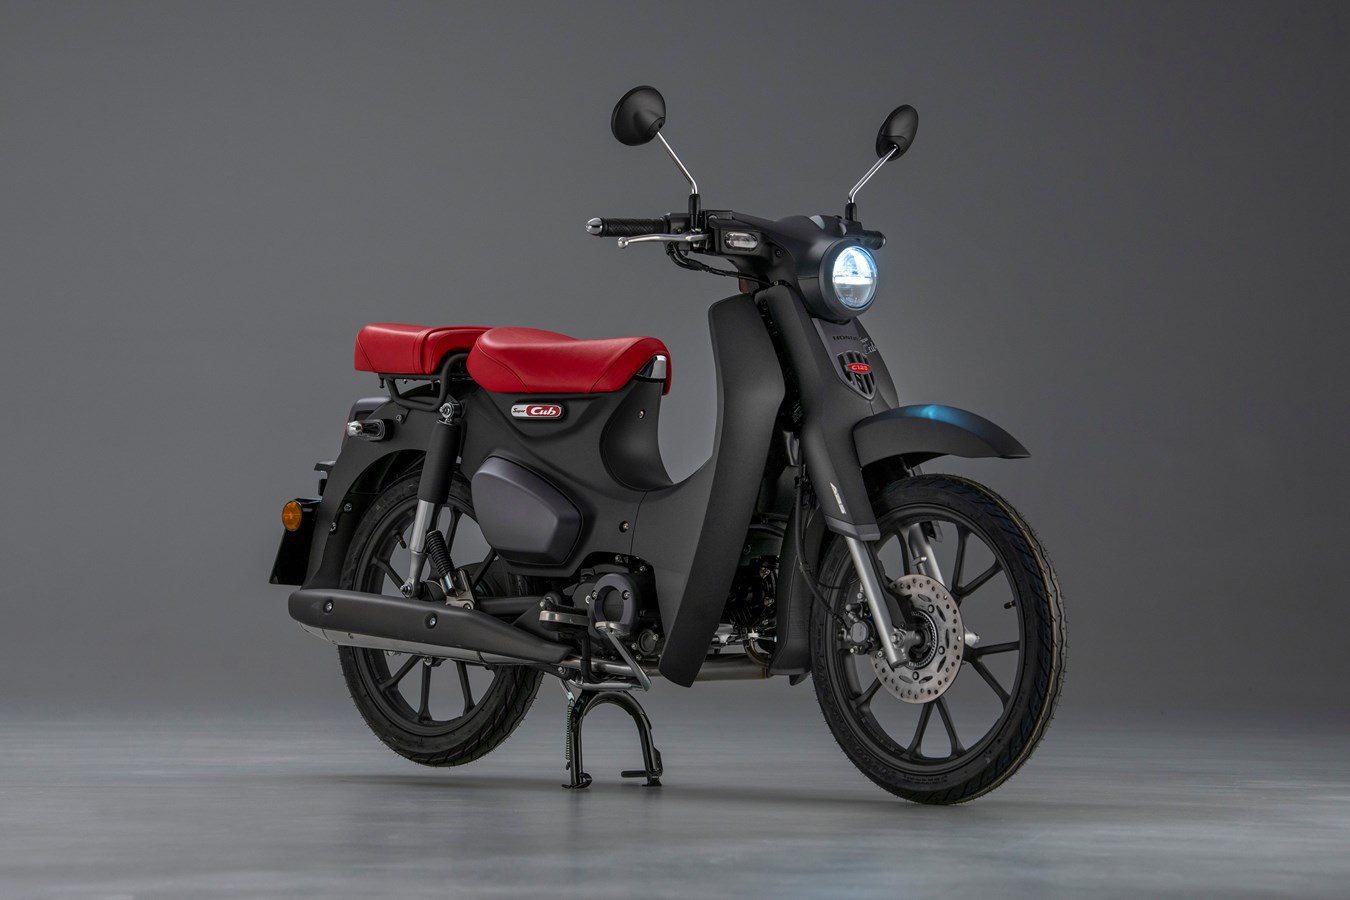 2022 Honda 125 Cub in black